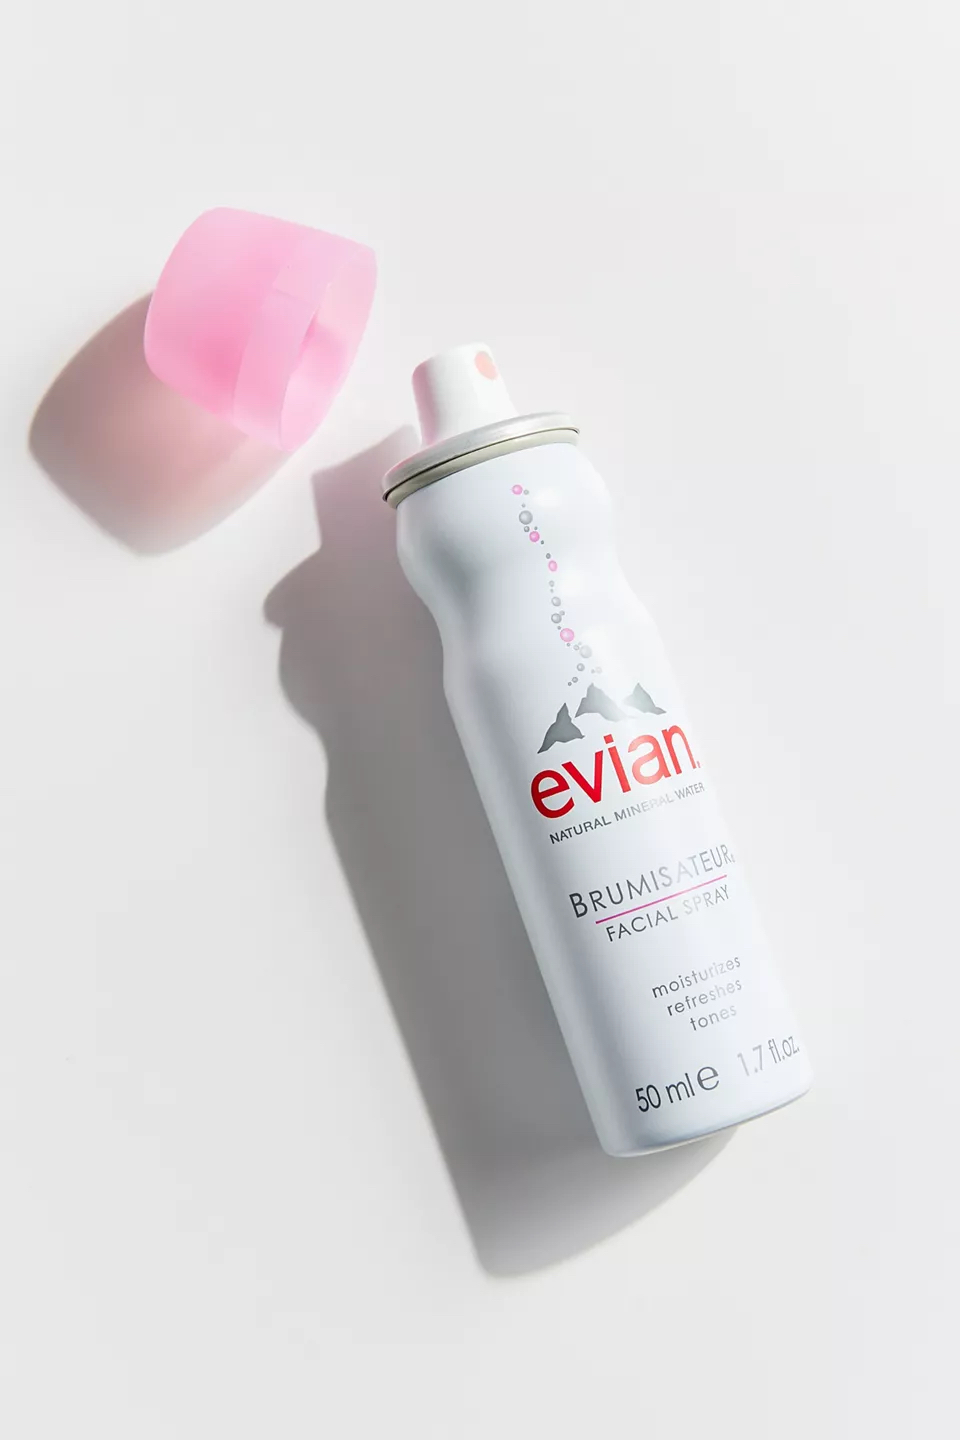 Evian Brumisateur® Natural Mineral Water Facial Spray — Coast Fiber Tek